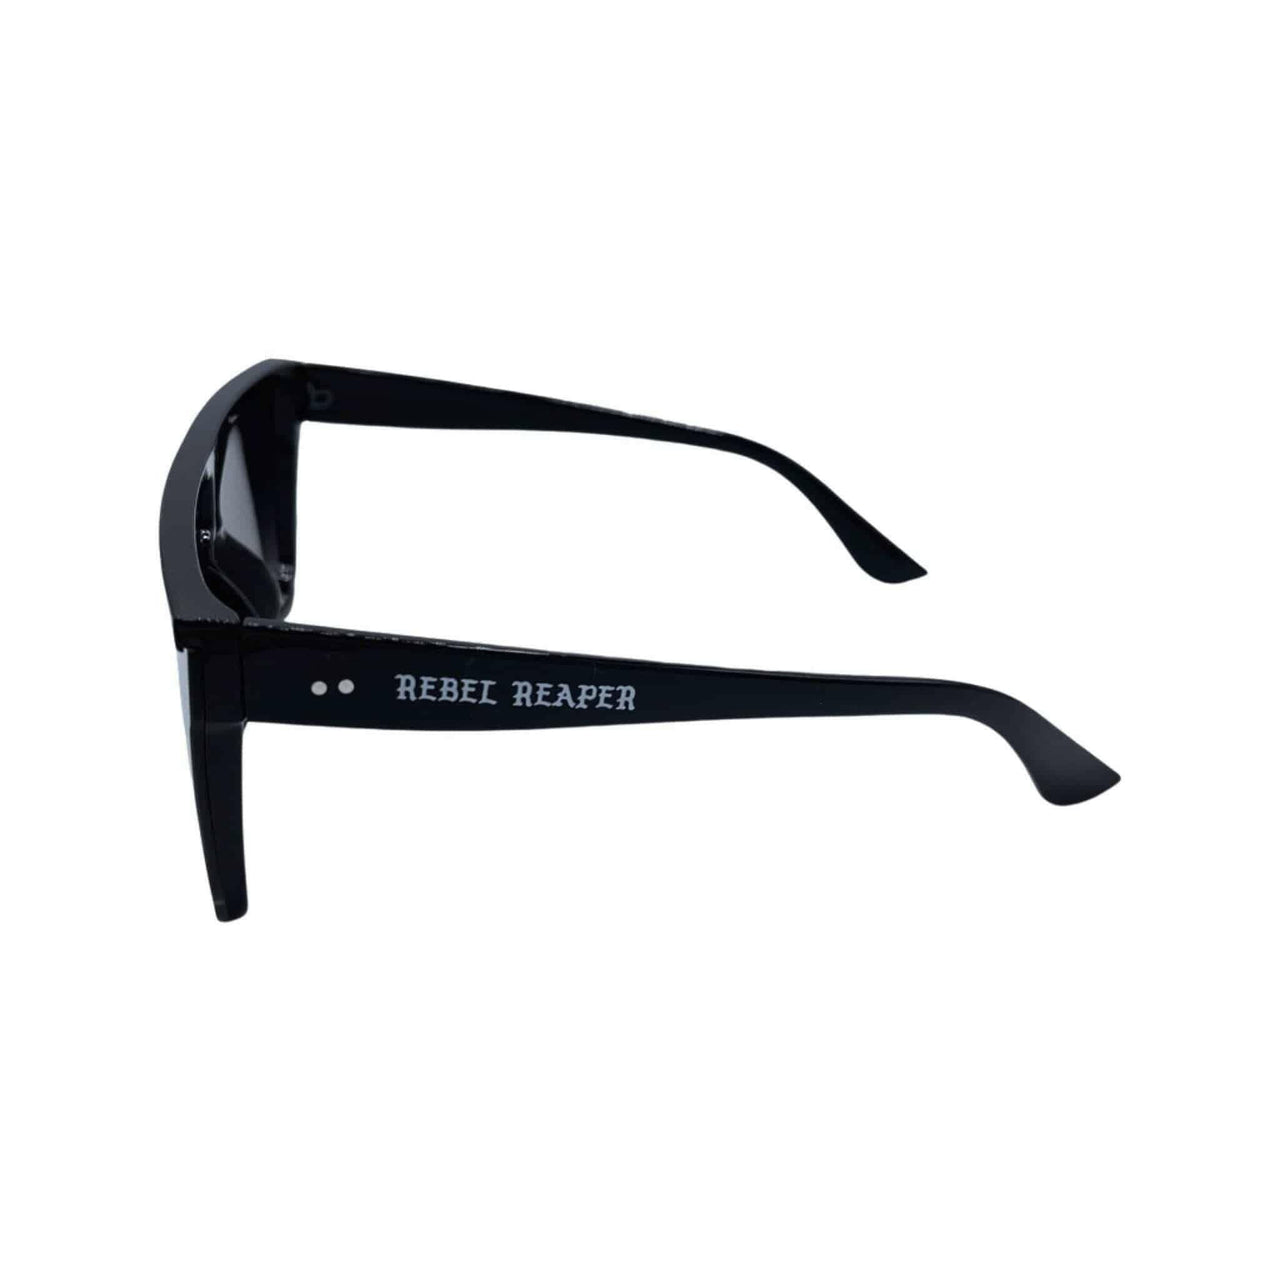 Silver OG Mirrored Sunglasses - Rebel Reaper Clothing Company Sunglasses